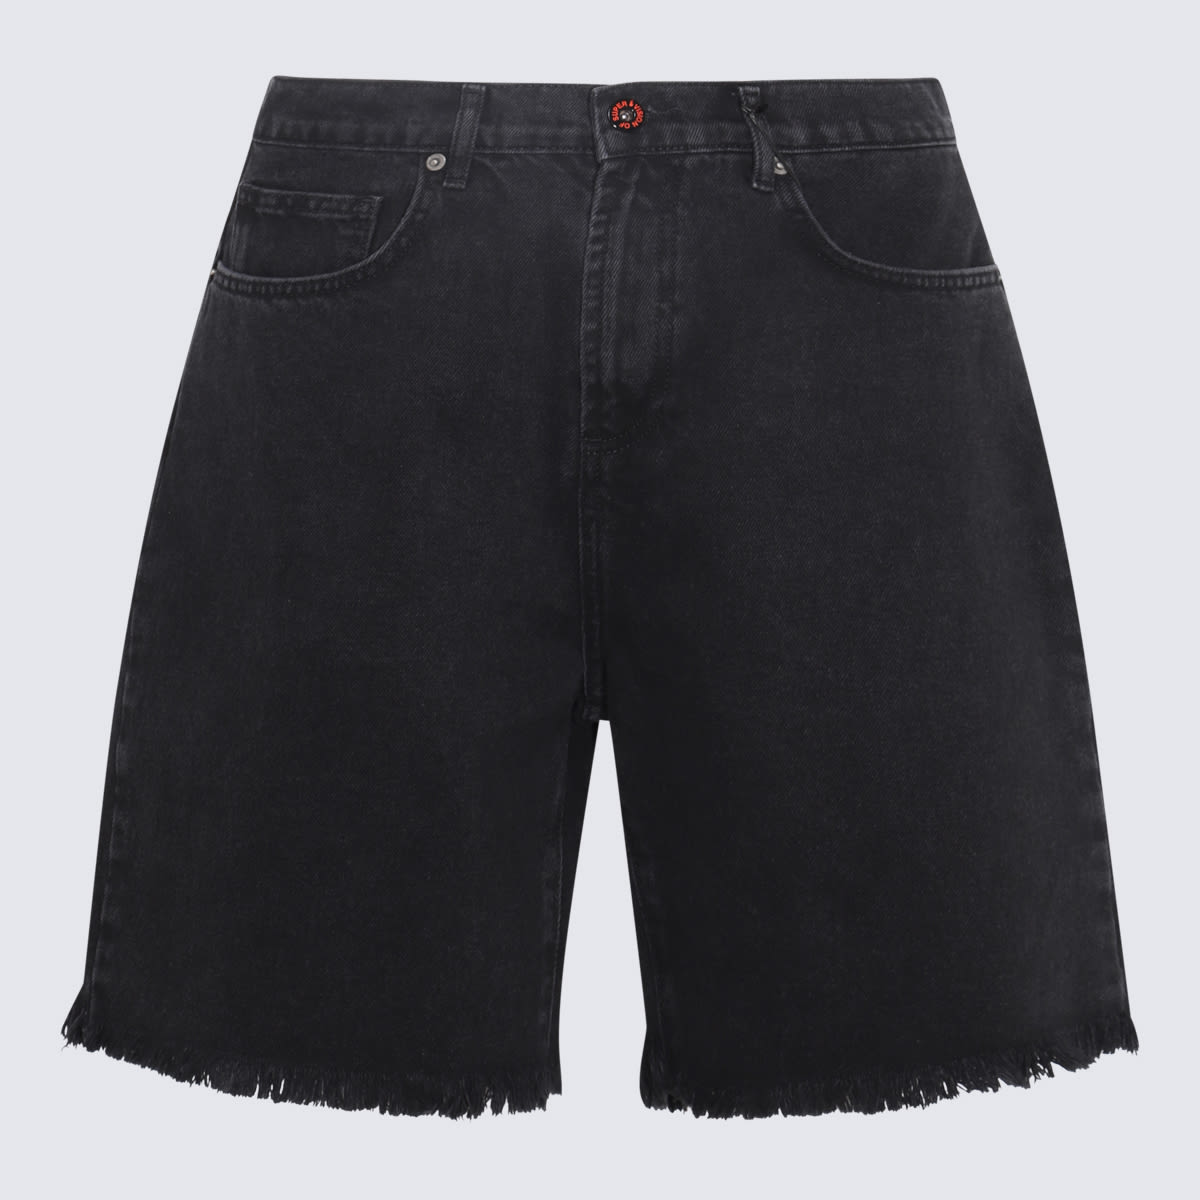 Shop Vision Of Super Black And White Cotton Denim Shorts